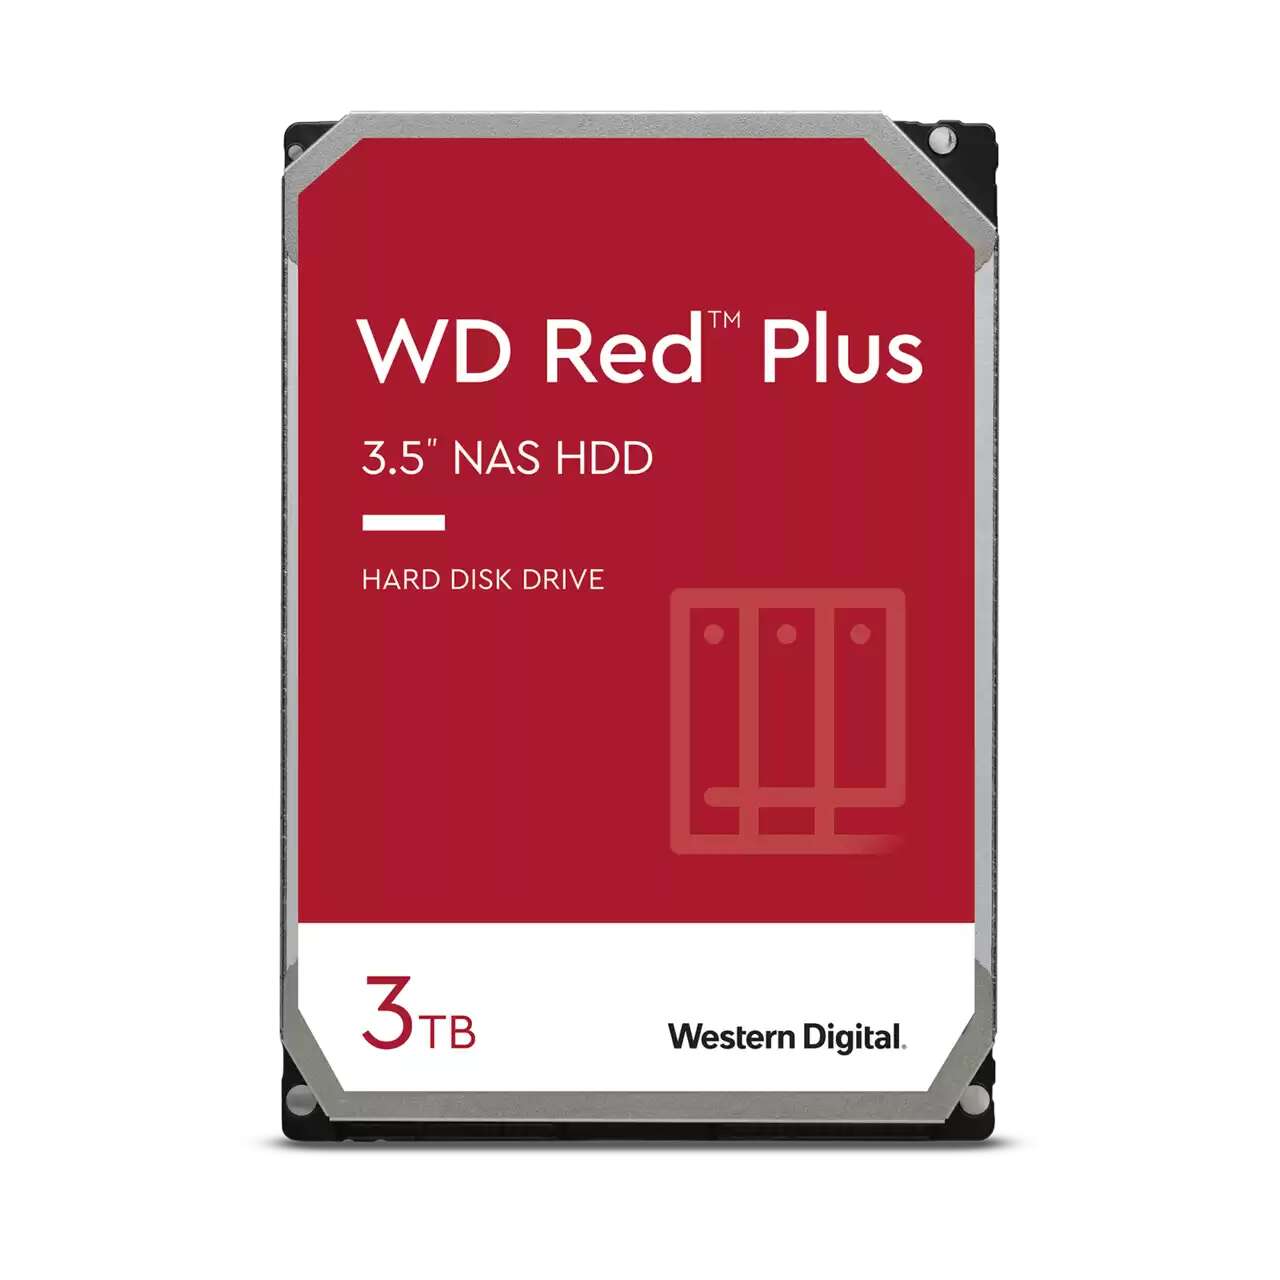 Western digital 3tb (256mb) red plus sata3 3.5" nas hdd